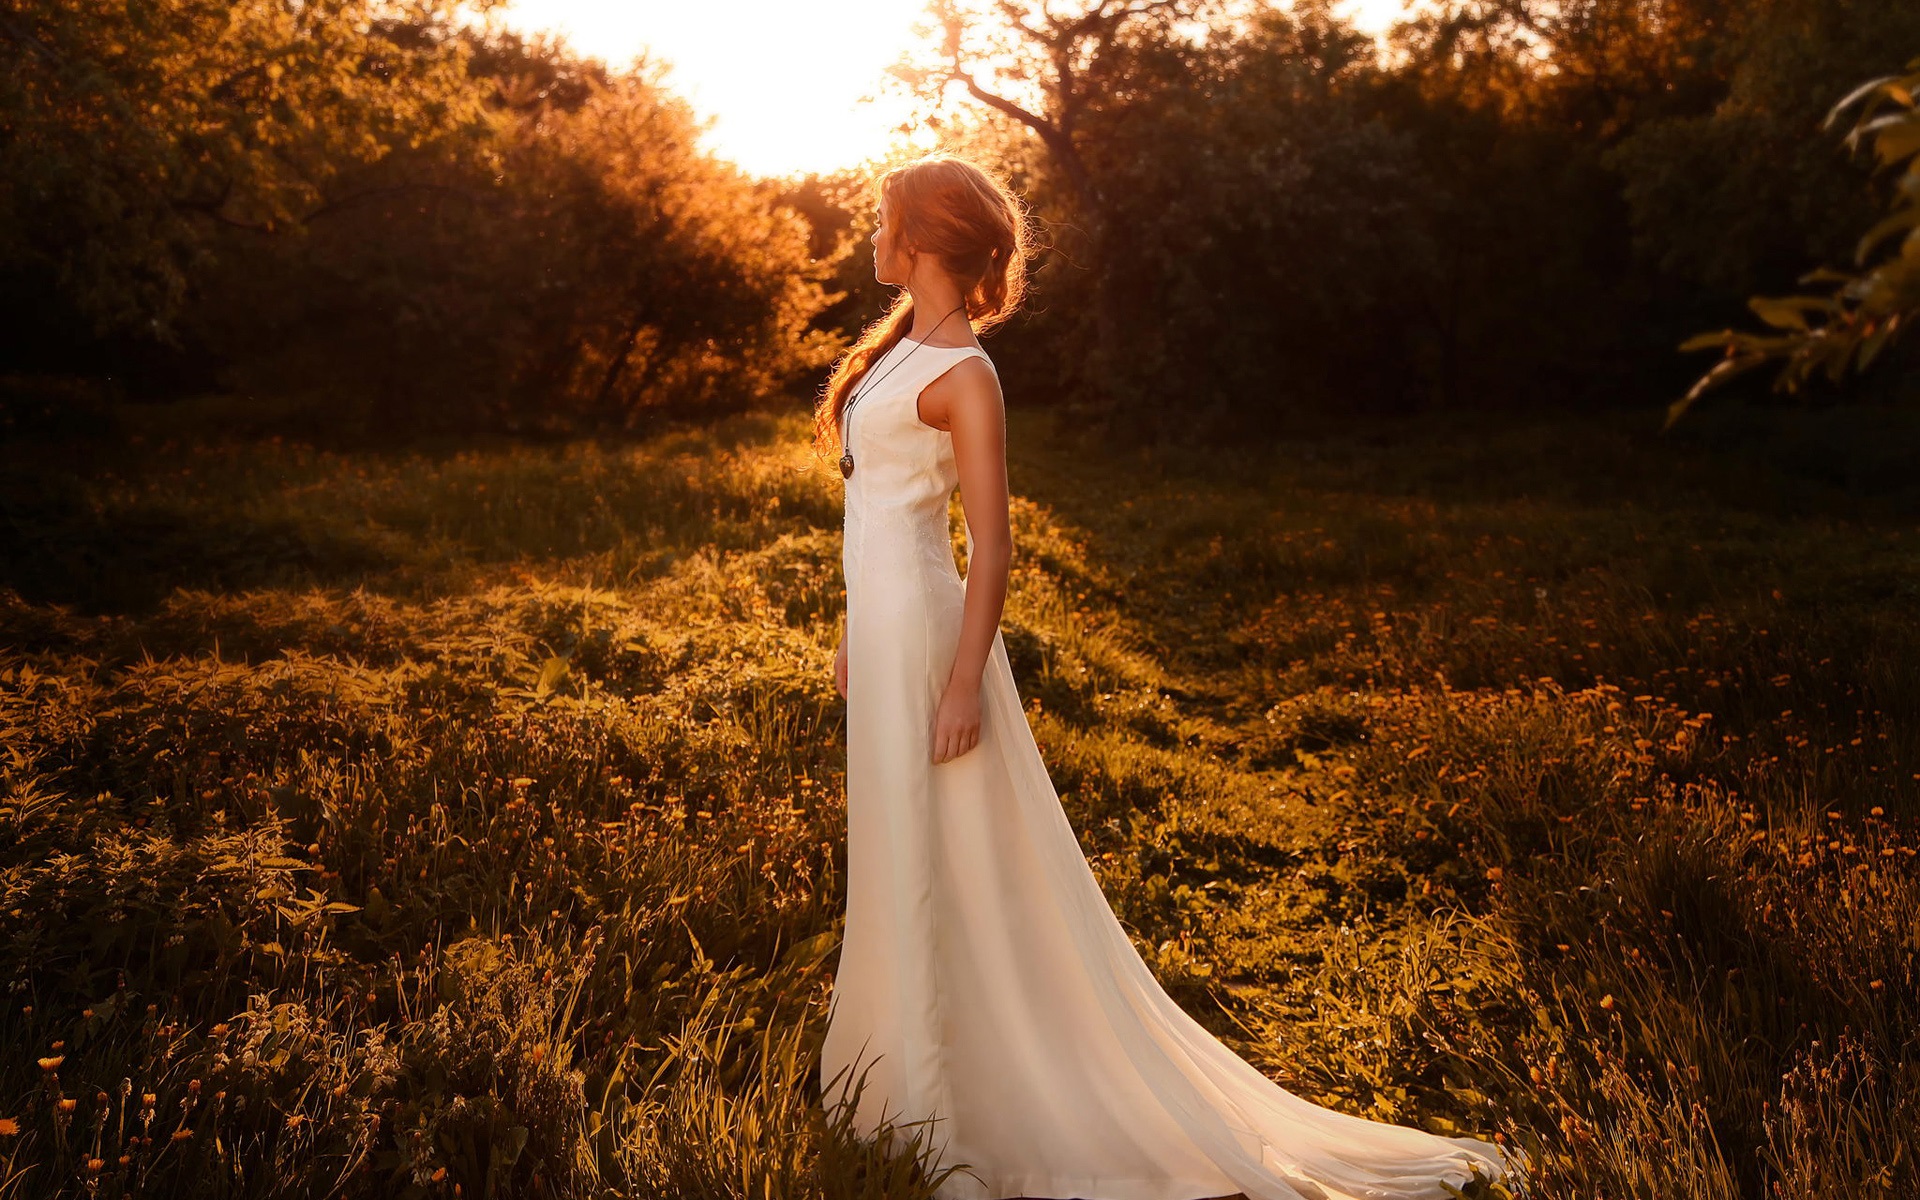 Sunset-girl-figure-dress-sunlight_1920x1200.jpg